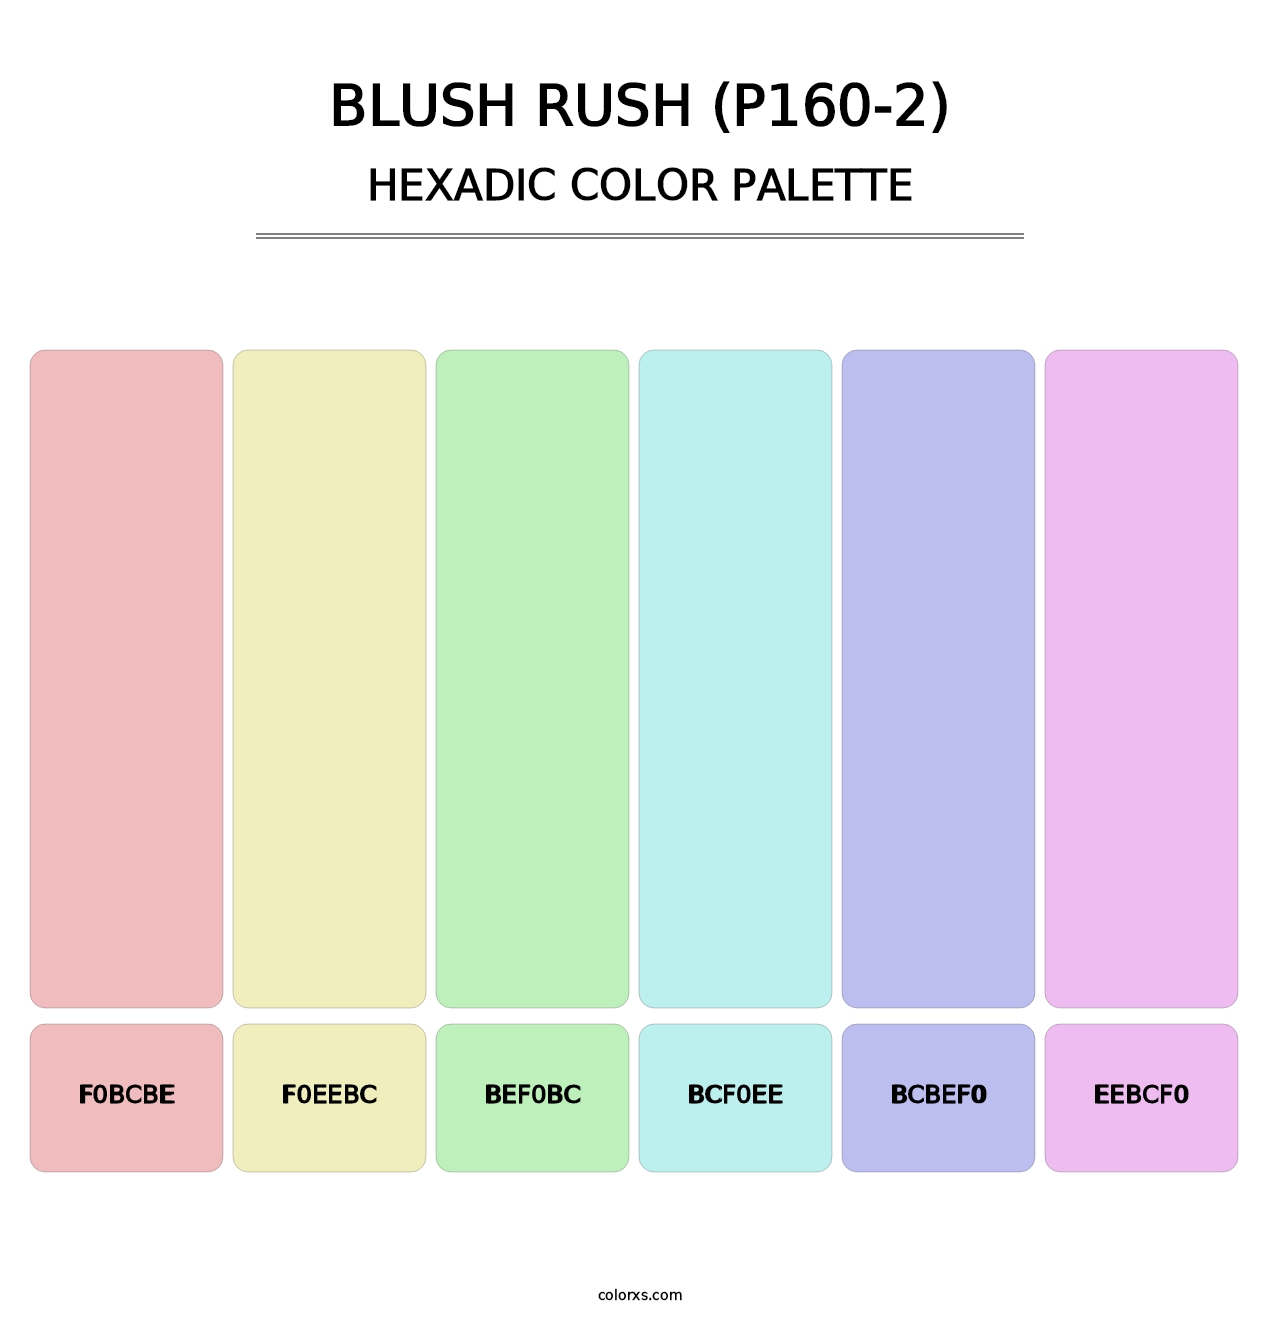 Blush Rush (P160-2) - Hexadic Color Palette